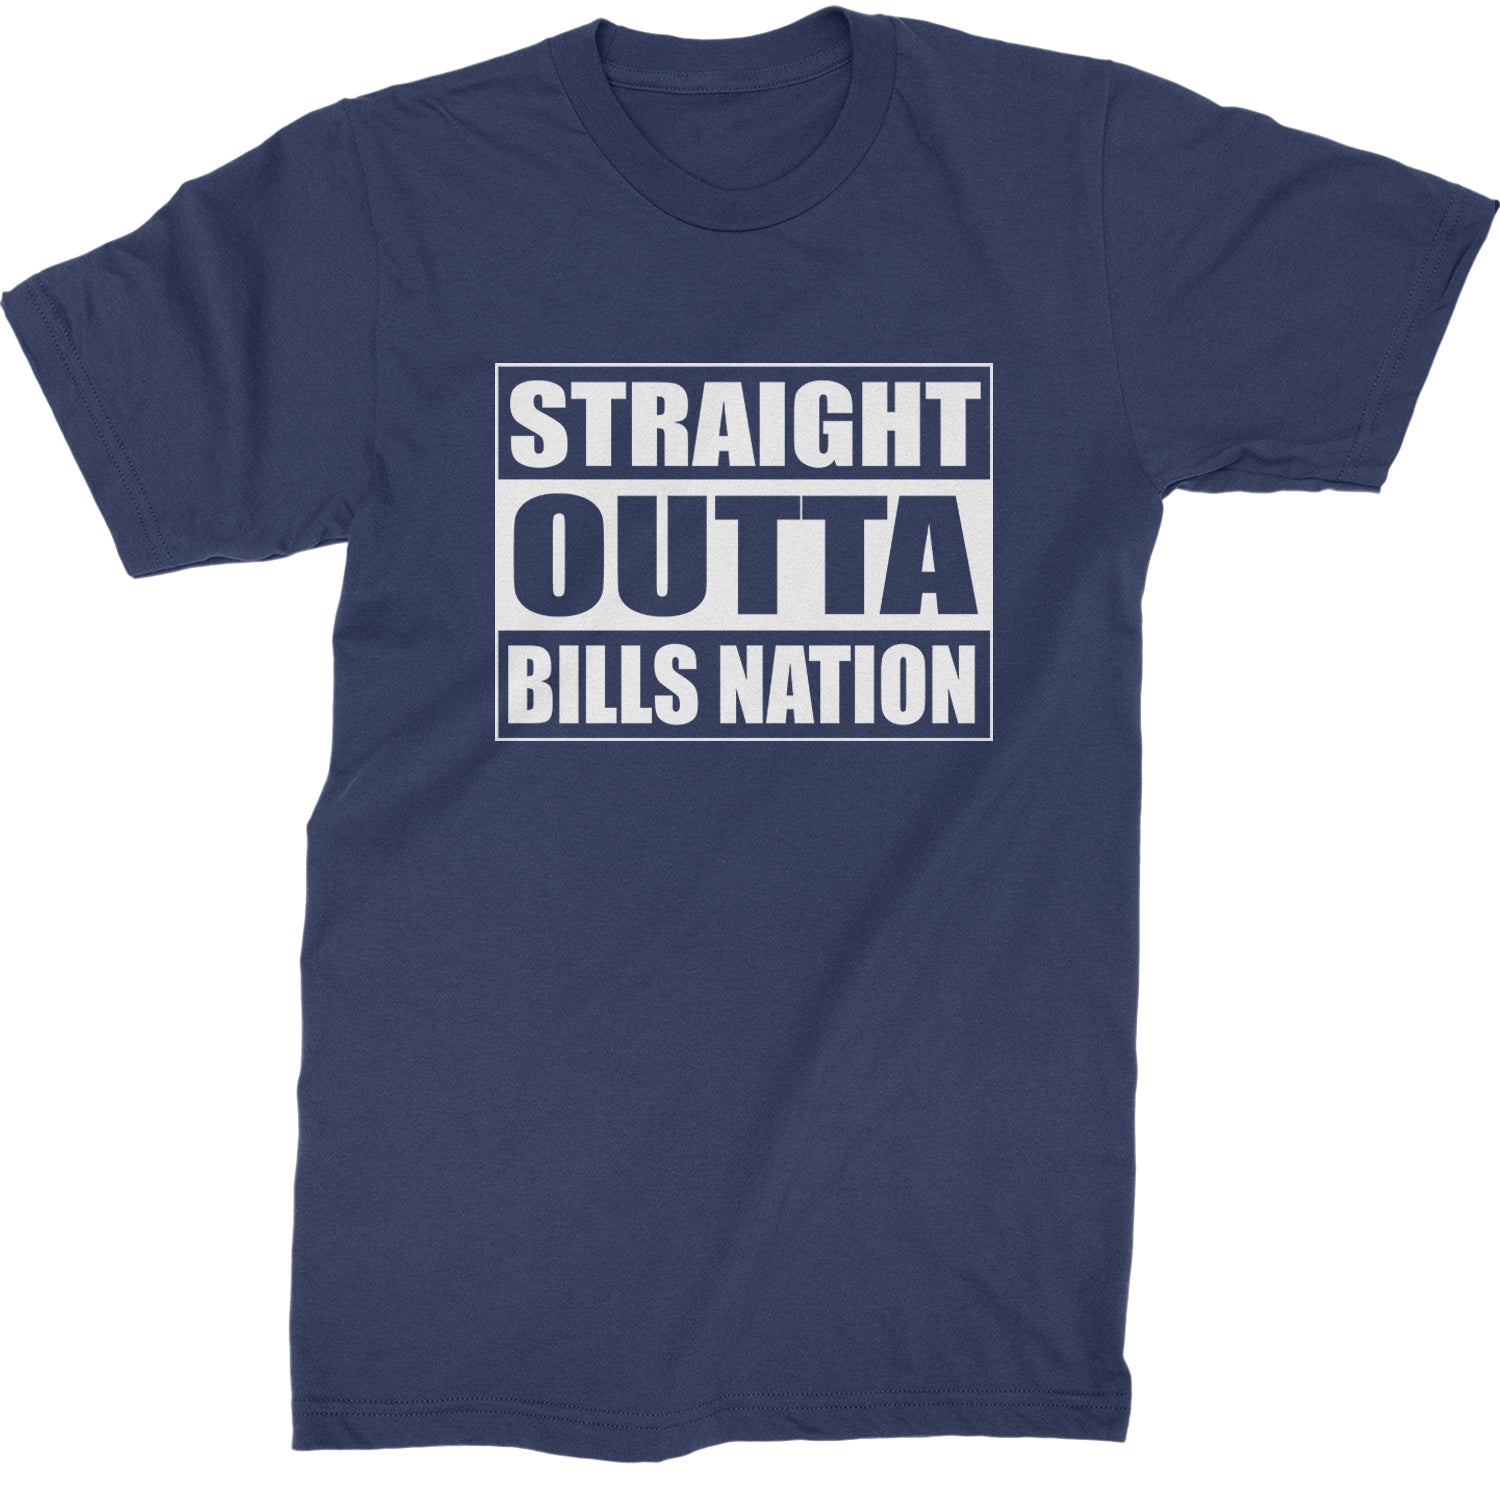 Straight Outta Bills Nation  Mens T-shirt Navy Blue